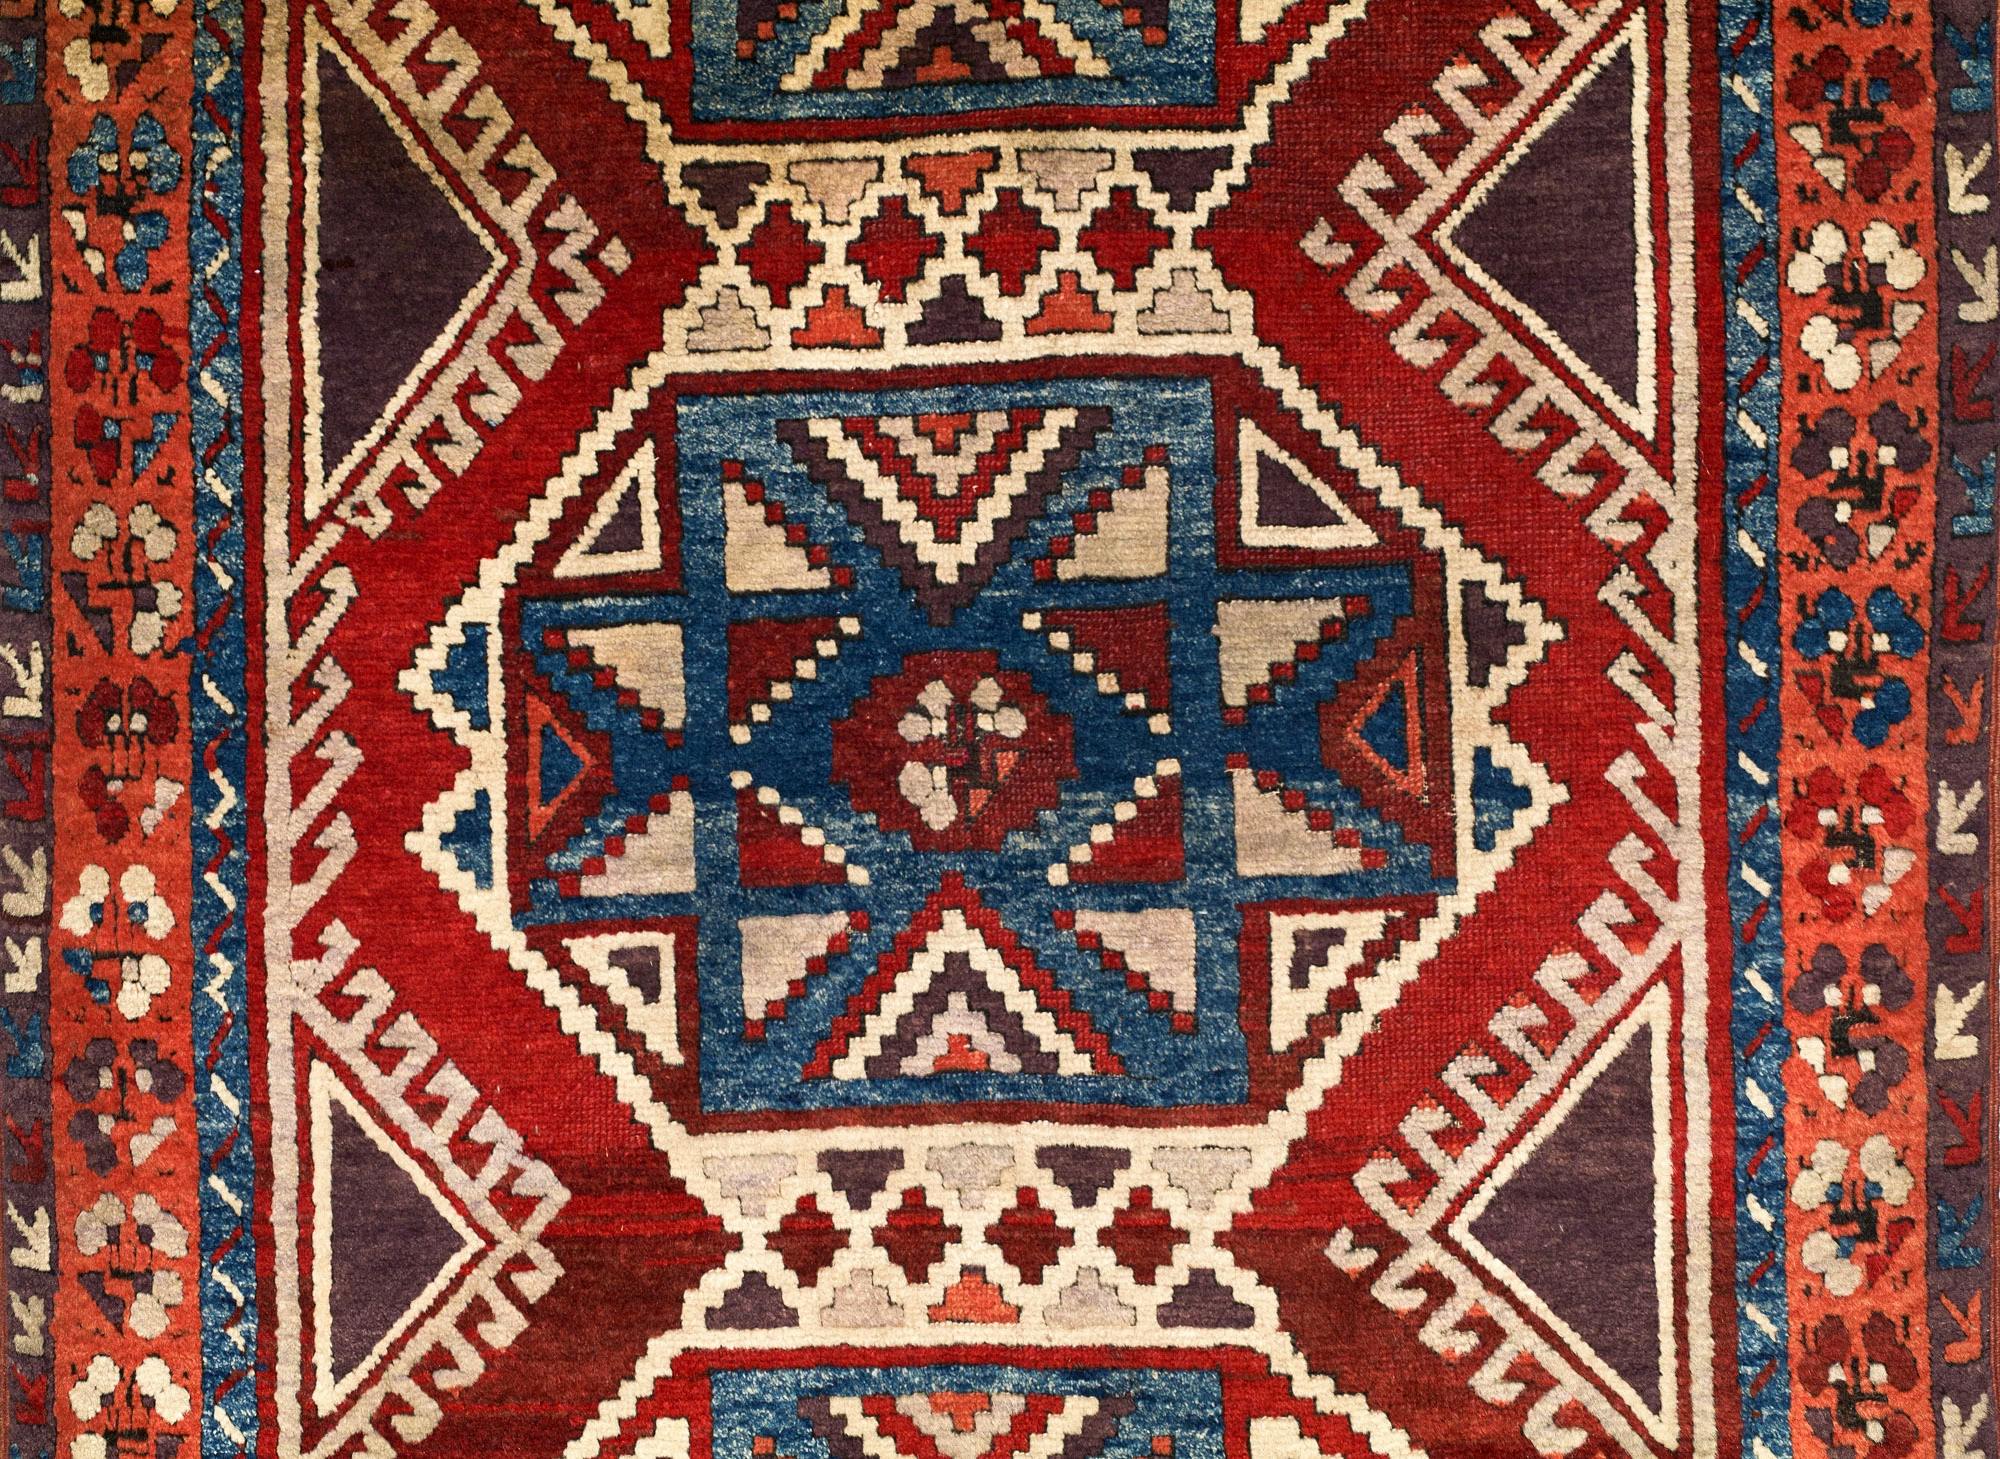 Karapinar Teppich aus Konya, 338x114 cm, antik um 1800 (Sternmotiv)